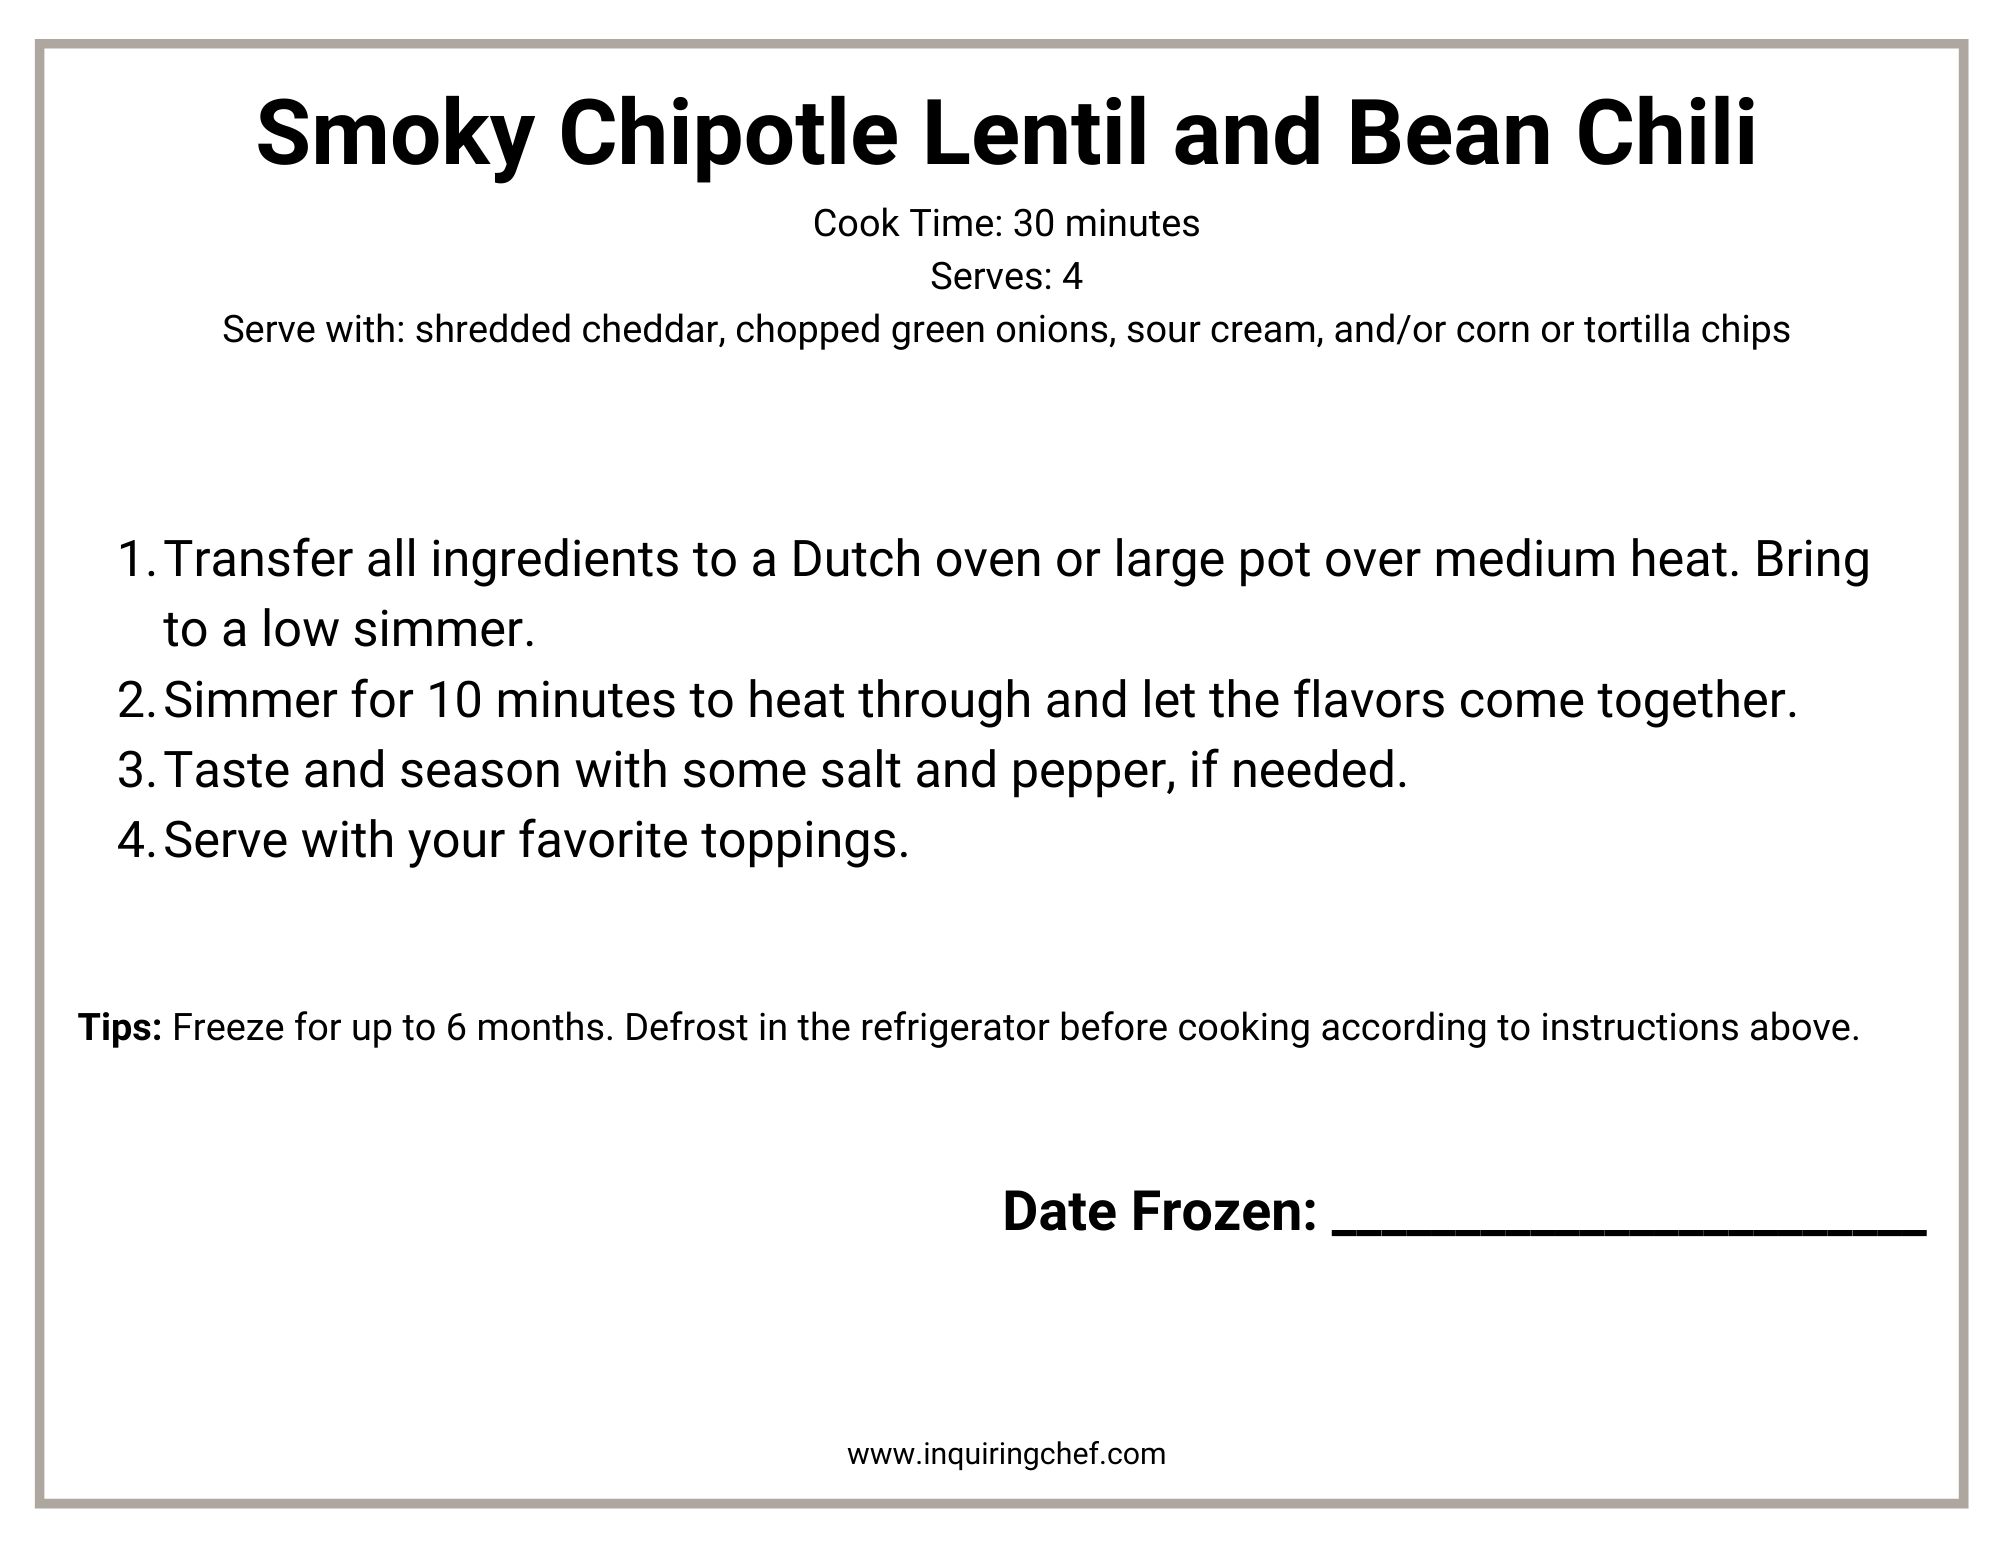 smoky chipotle chili freezer label